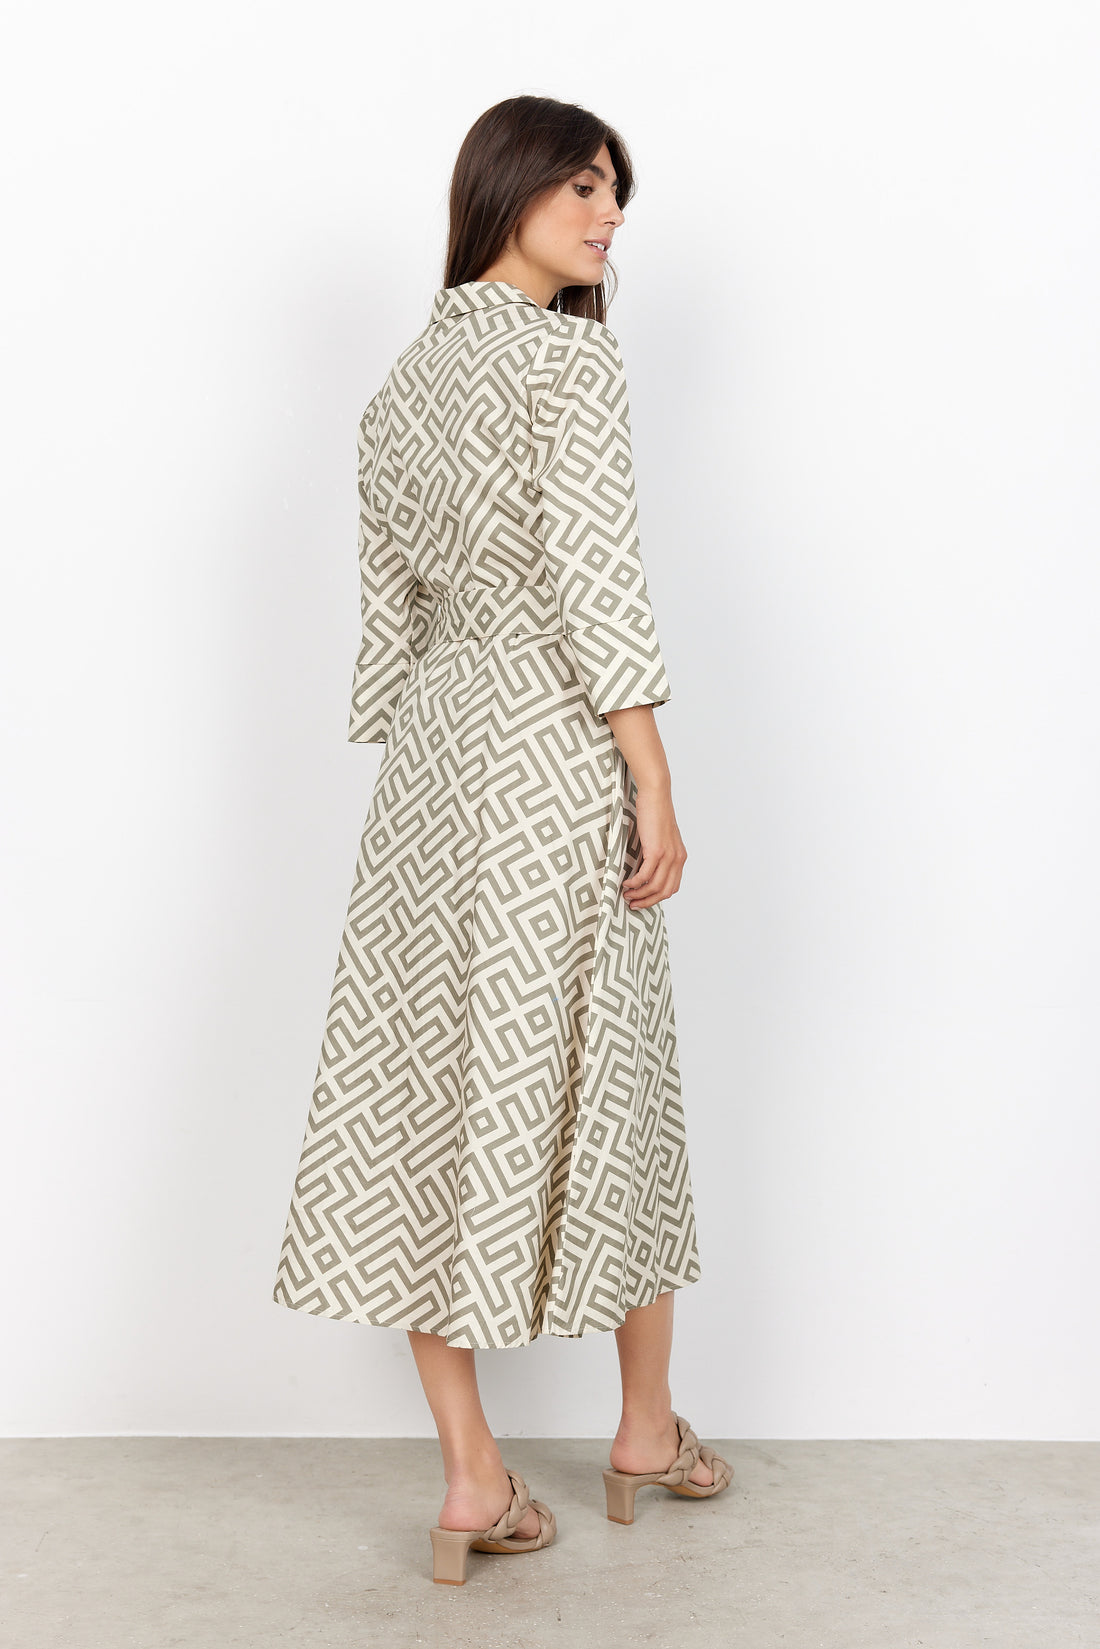 Soya Concept - Kirsty Dress -40% at Checkout